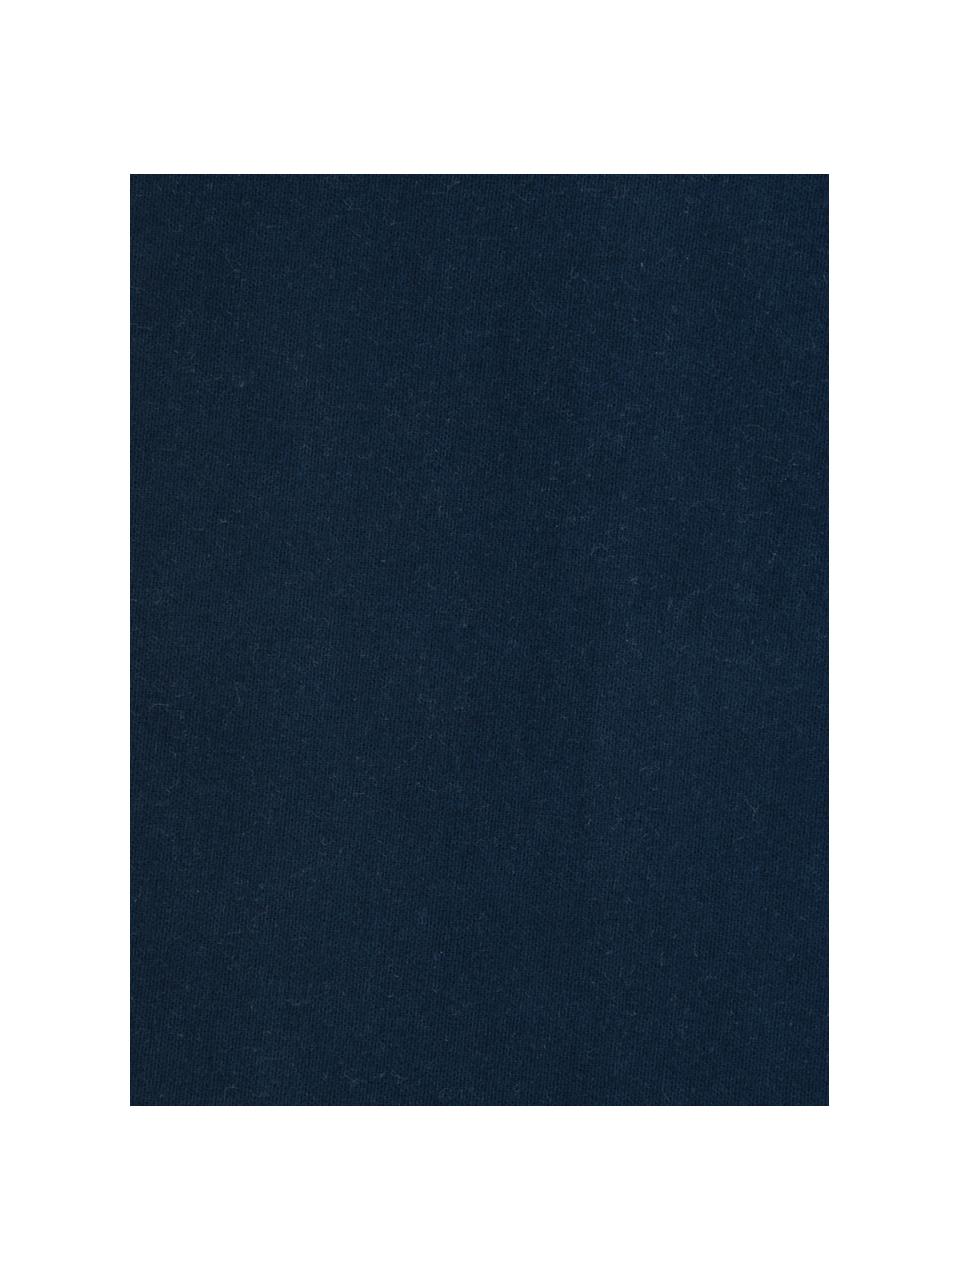 Sábana bajera de franela Biba, Azul oscuro, Cama 180 cm (180 x 200 cm)